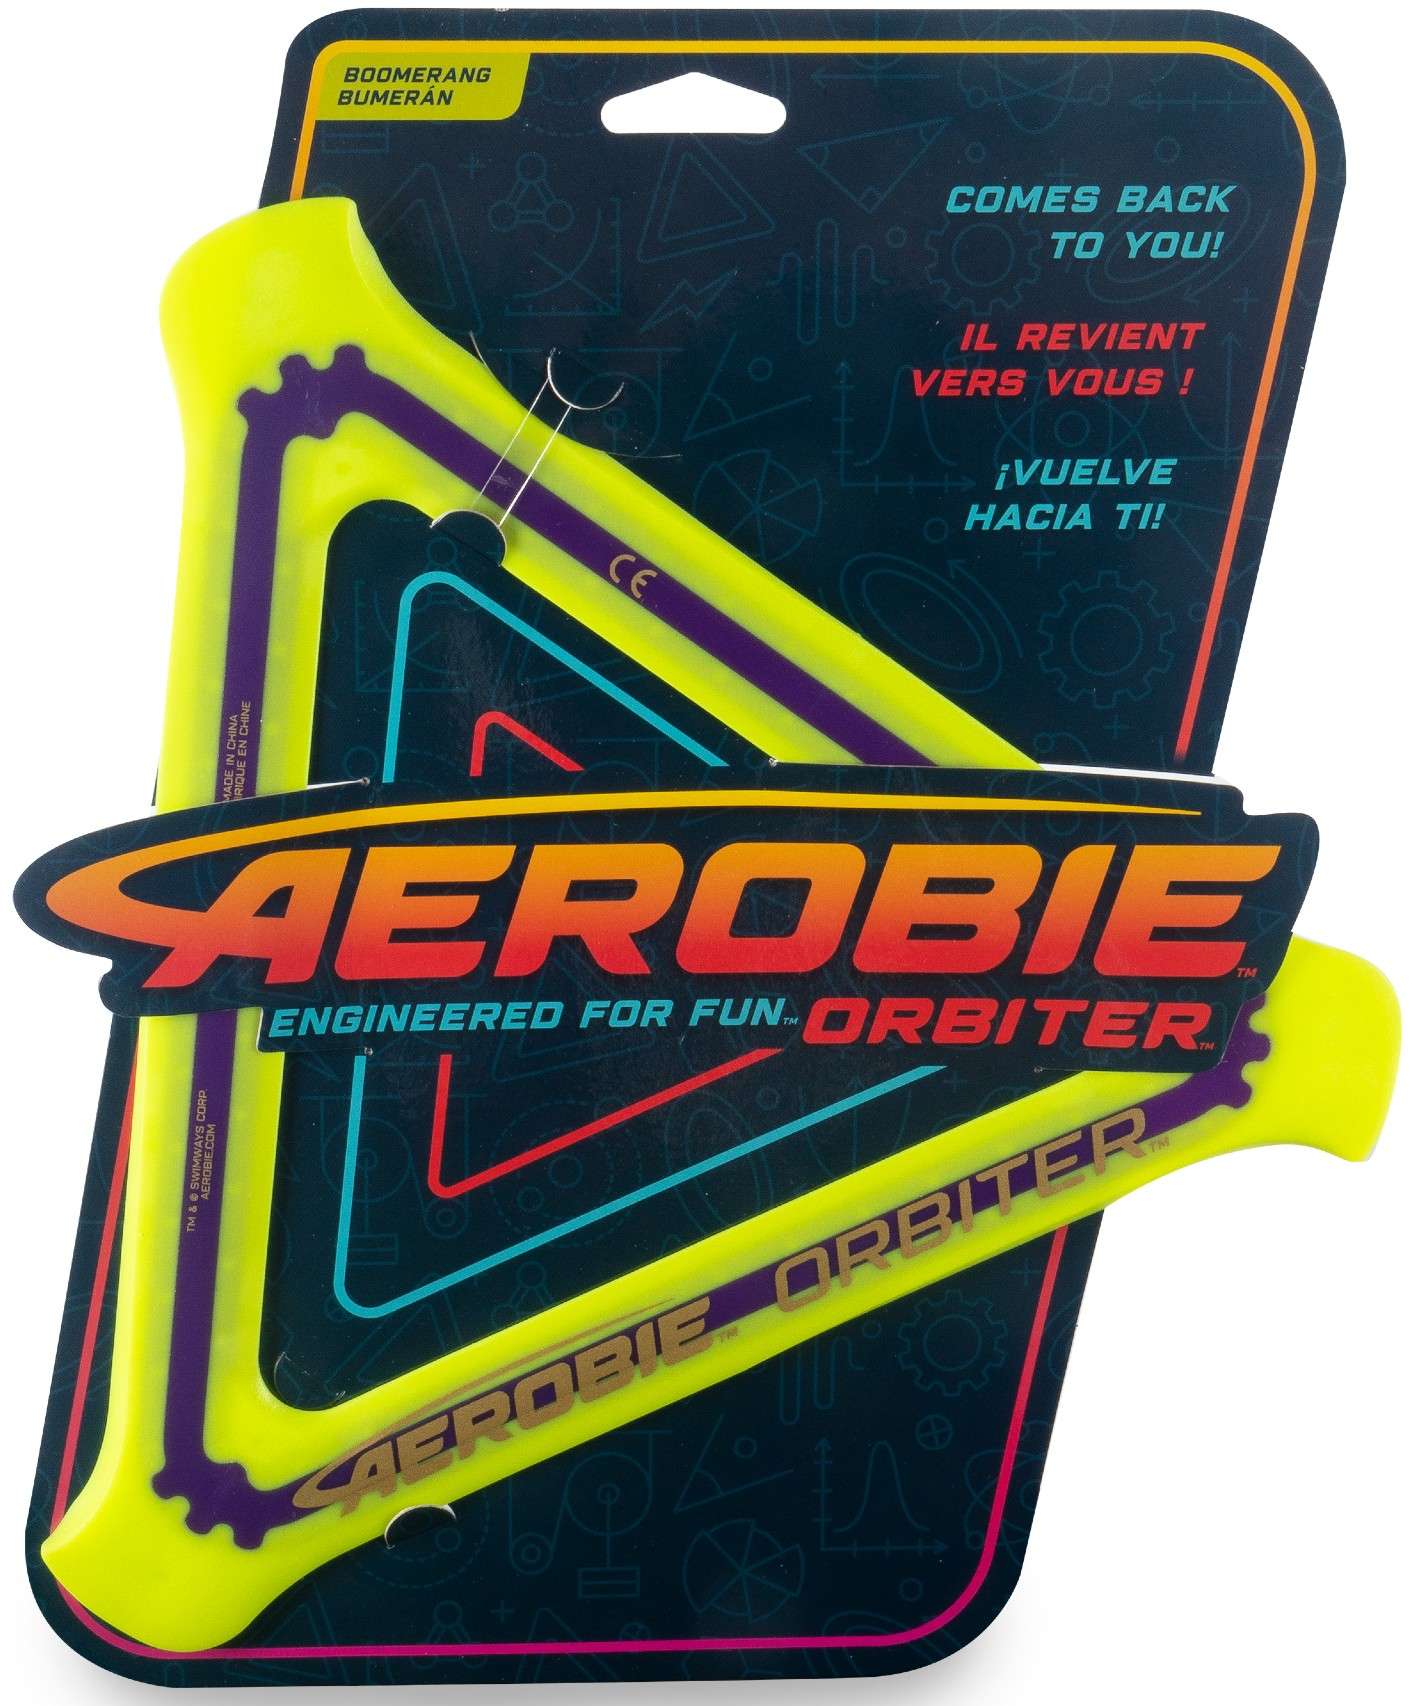 Gra zrcznociowa boomerang do rzucania Aerobie Orbiter